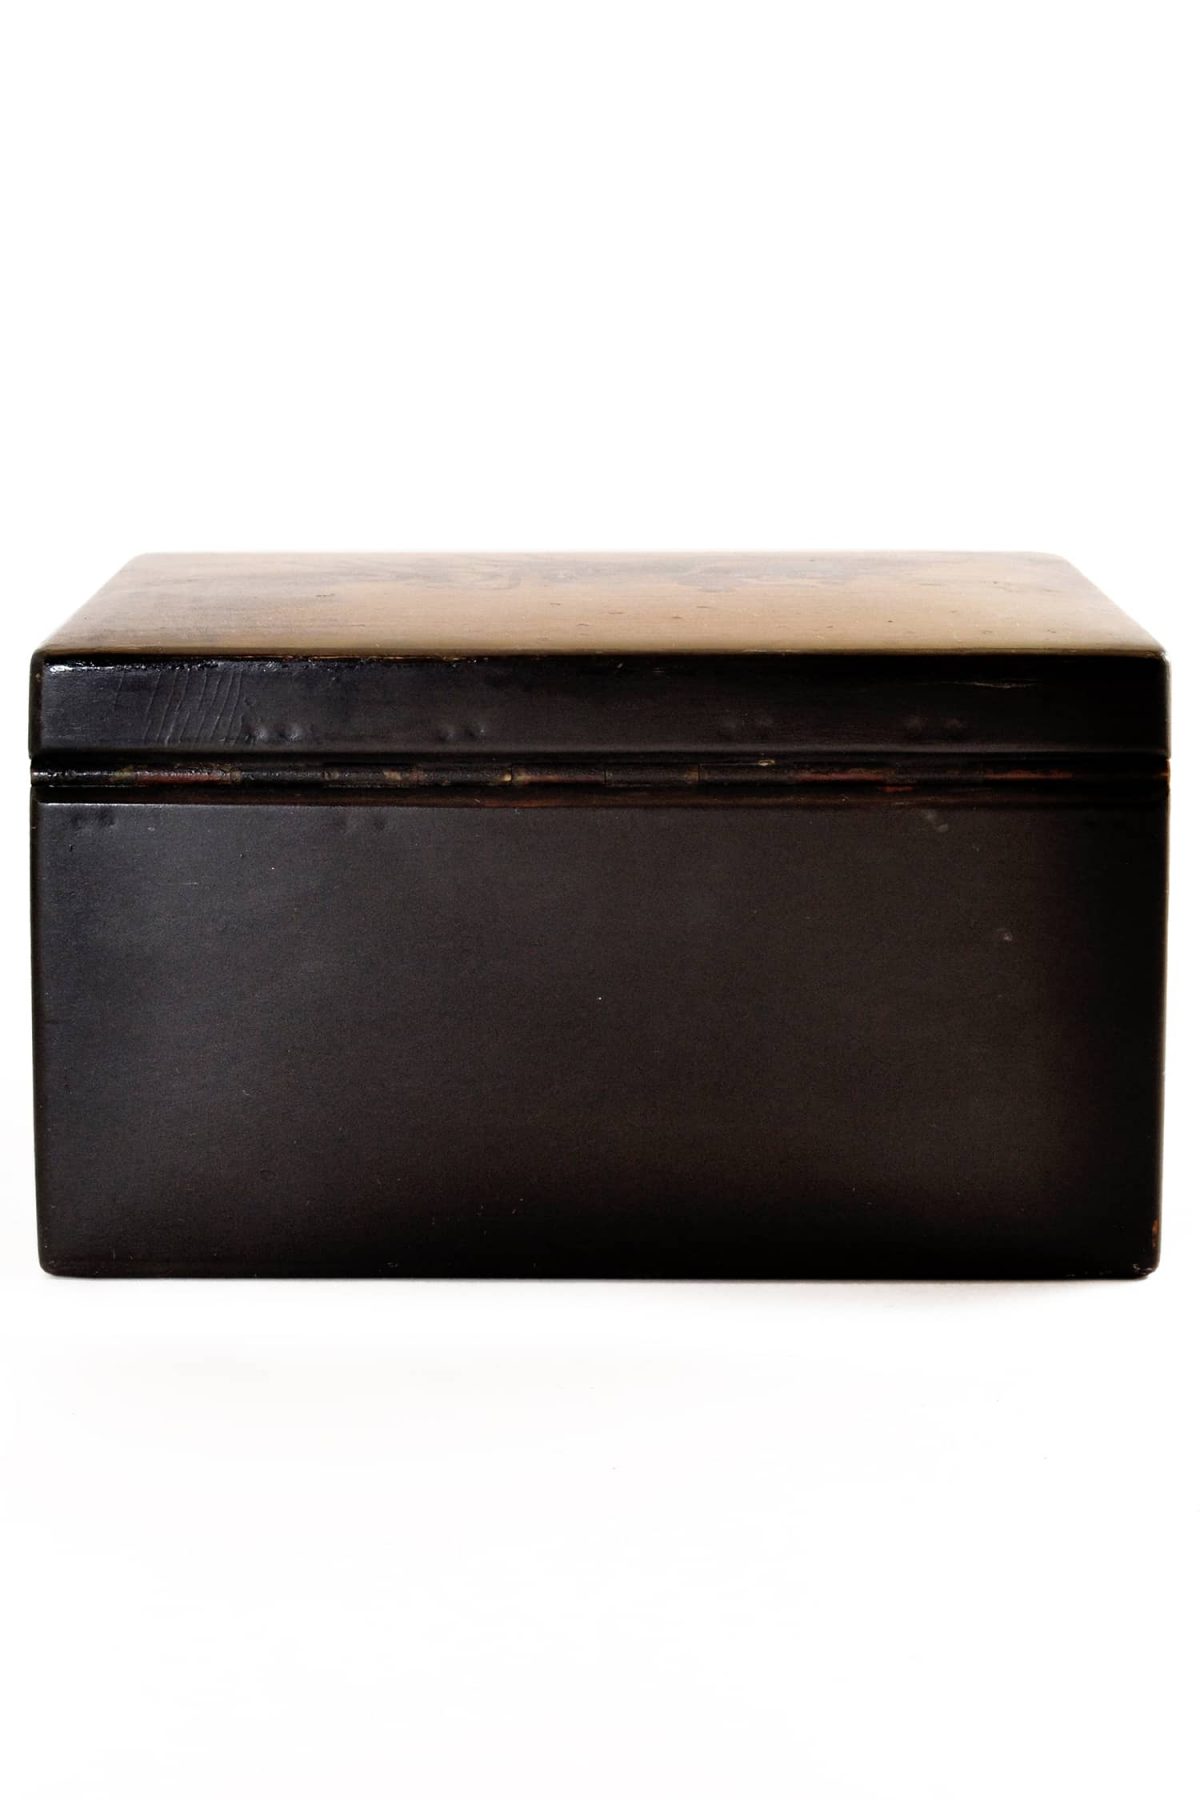 Antique Imperial Russia Papier Mache Tea Caddy Box “Troika“ Lid Lacquer Painting, B.L. Vishnikov 19th Century